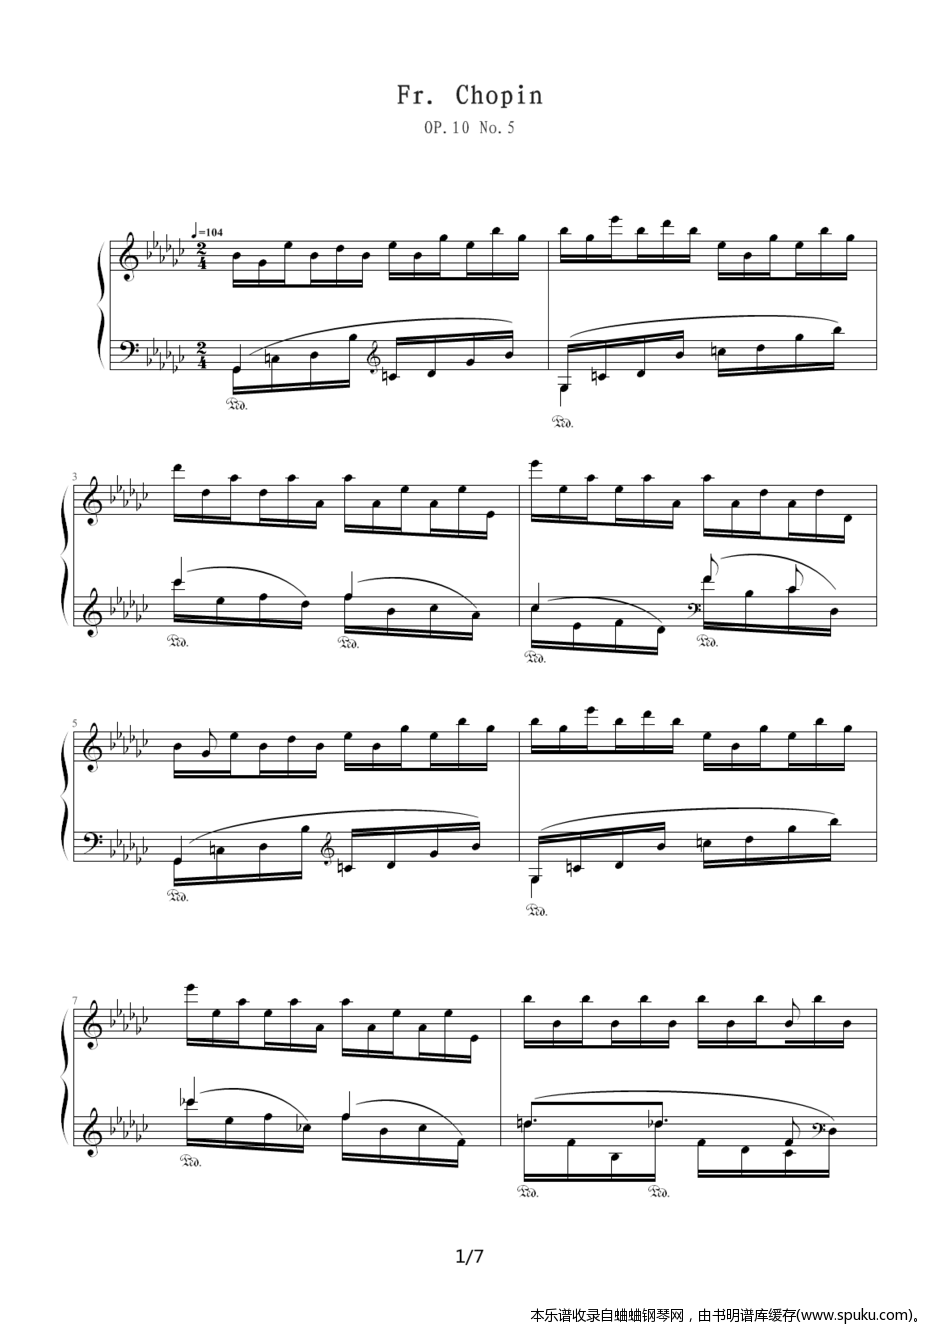 FrChopin1-钢琴谱-曲谱